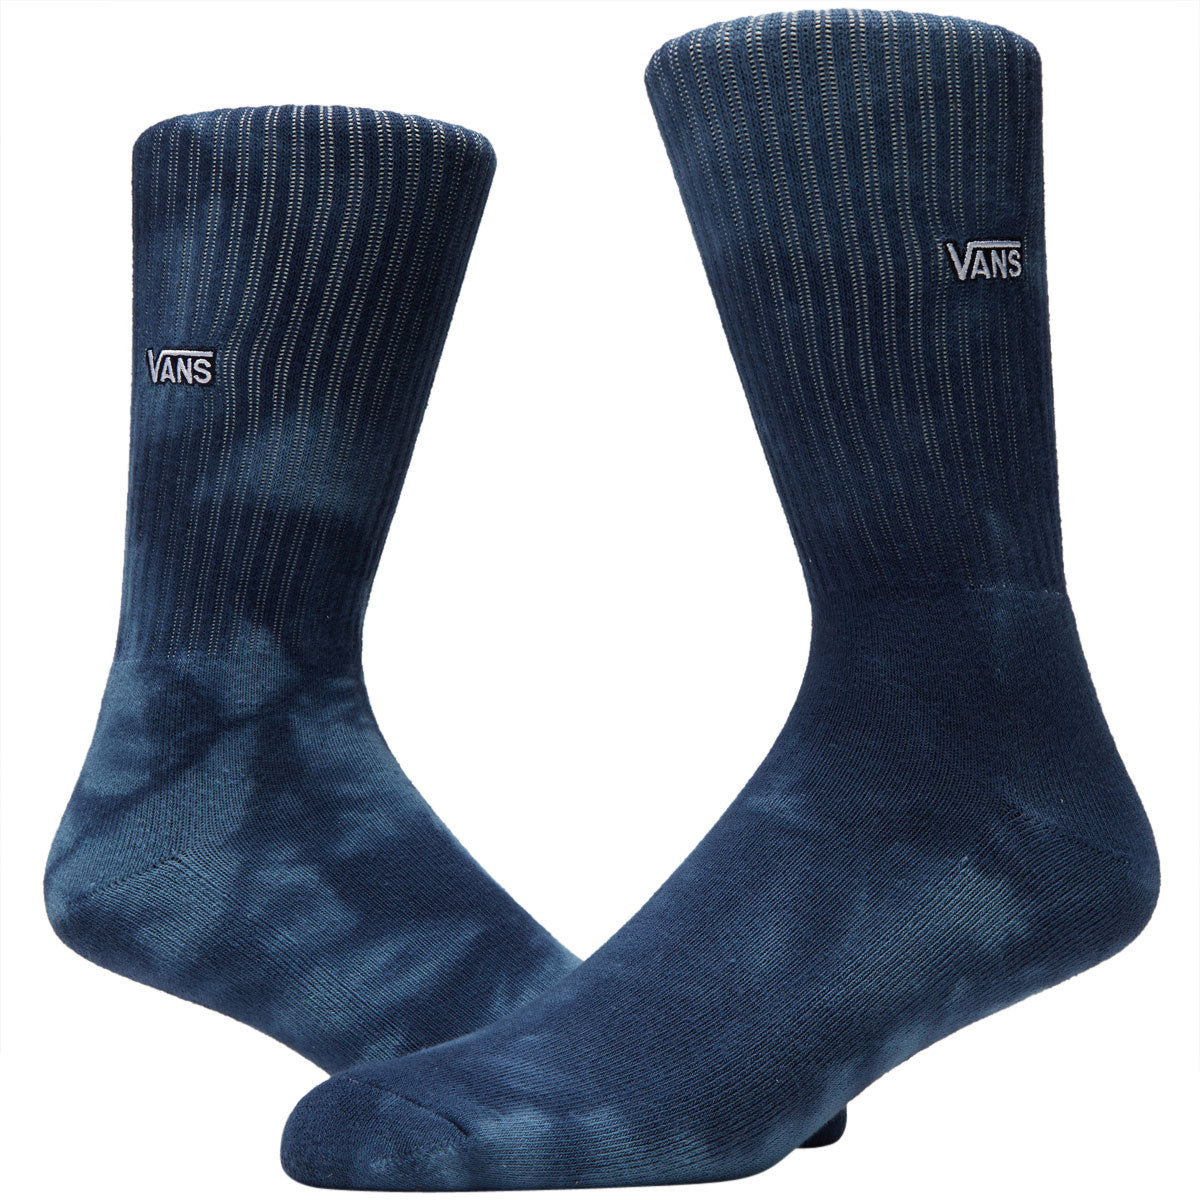 Vans Seasonal Tie Dye Crew II Socks - Copen Blue image 2